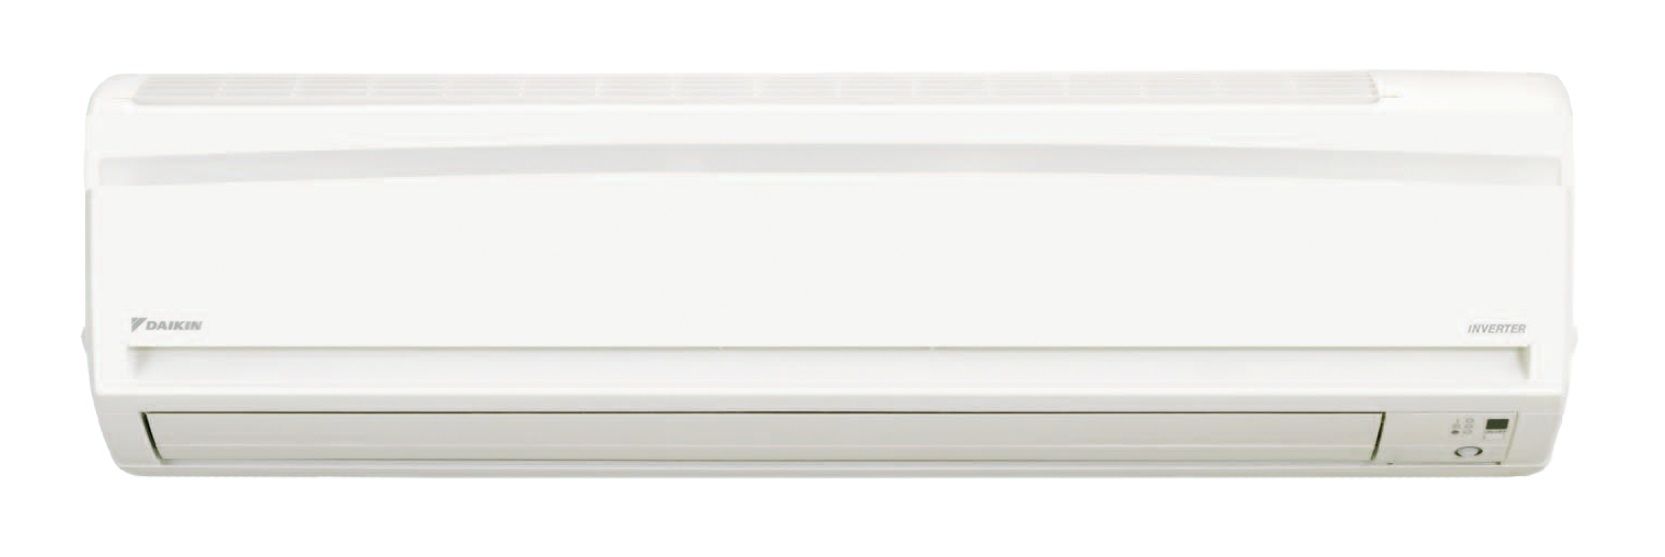 (image for) 大金 FTXS50LVMN 二匹 掛牆式分體冷氣機 (變頻冷暖)